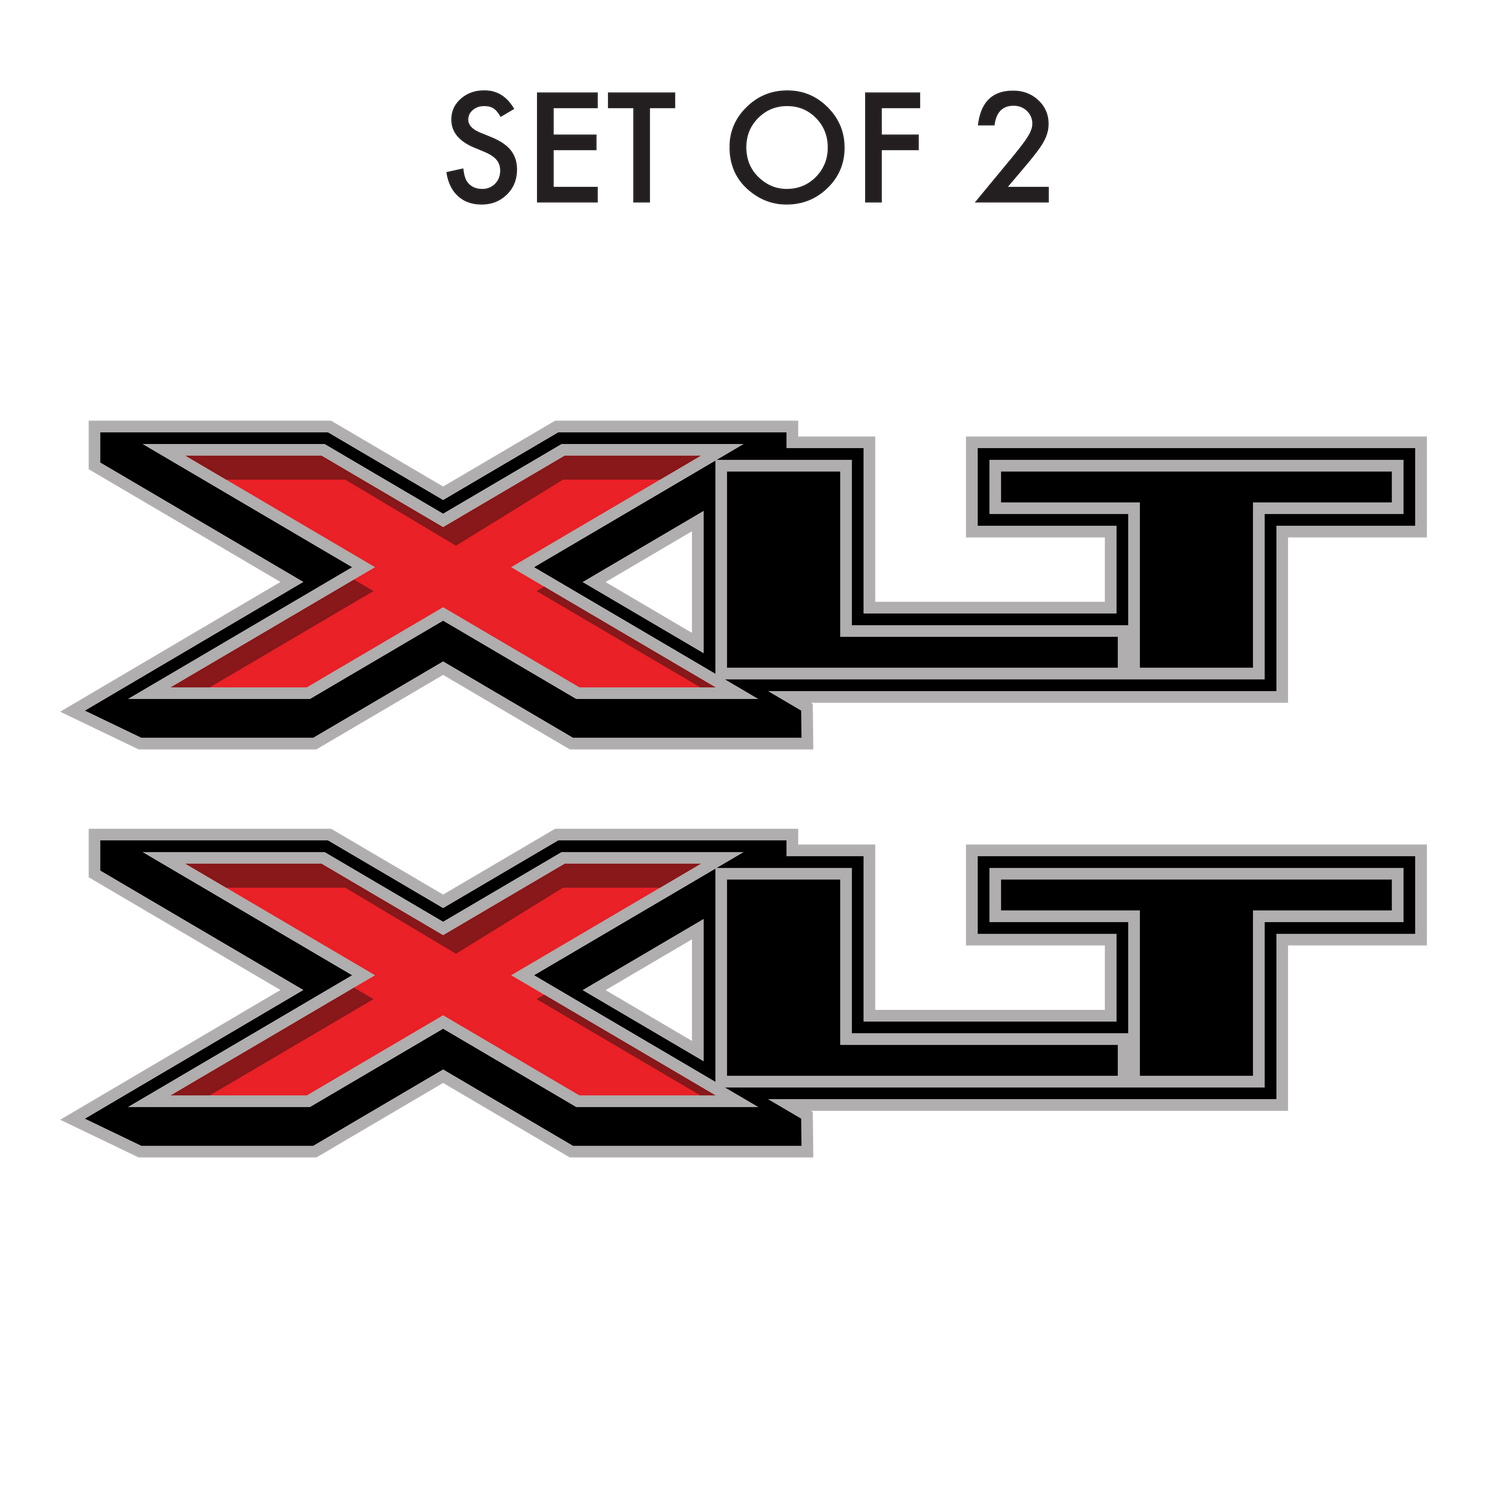 Set of 2: XLT vinyl sticker fits 2019 Ford F-150 F-250 pickup truck bedside - US Rallystripes